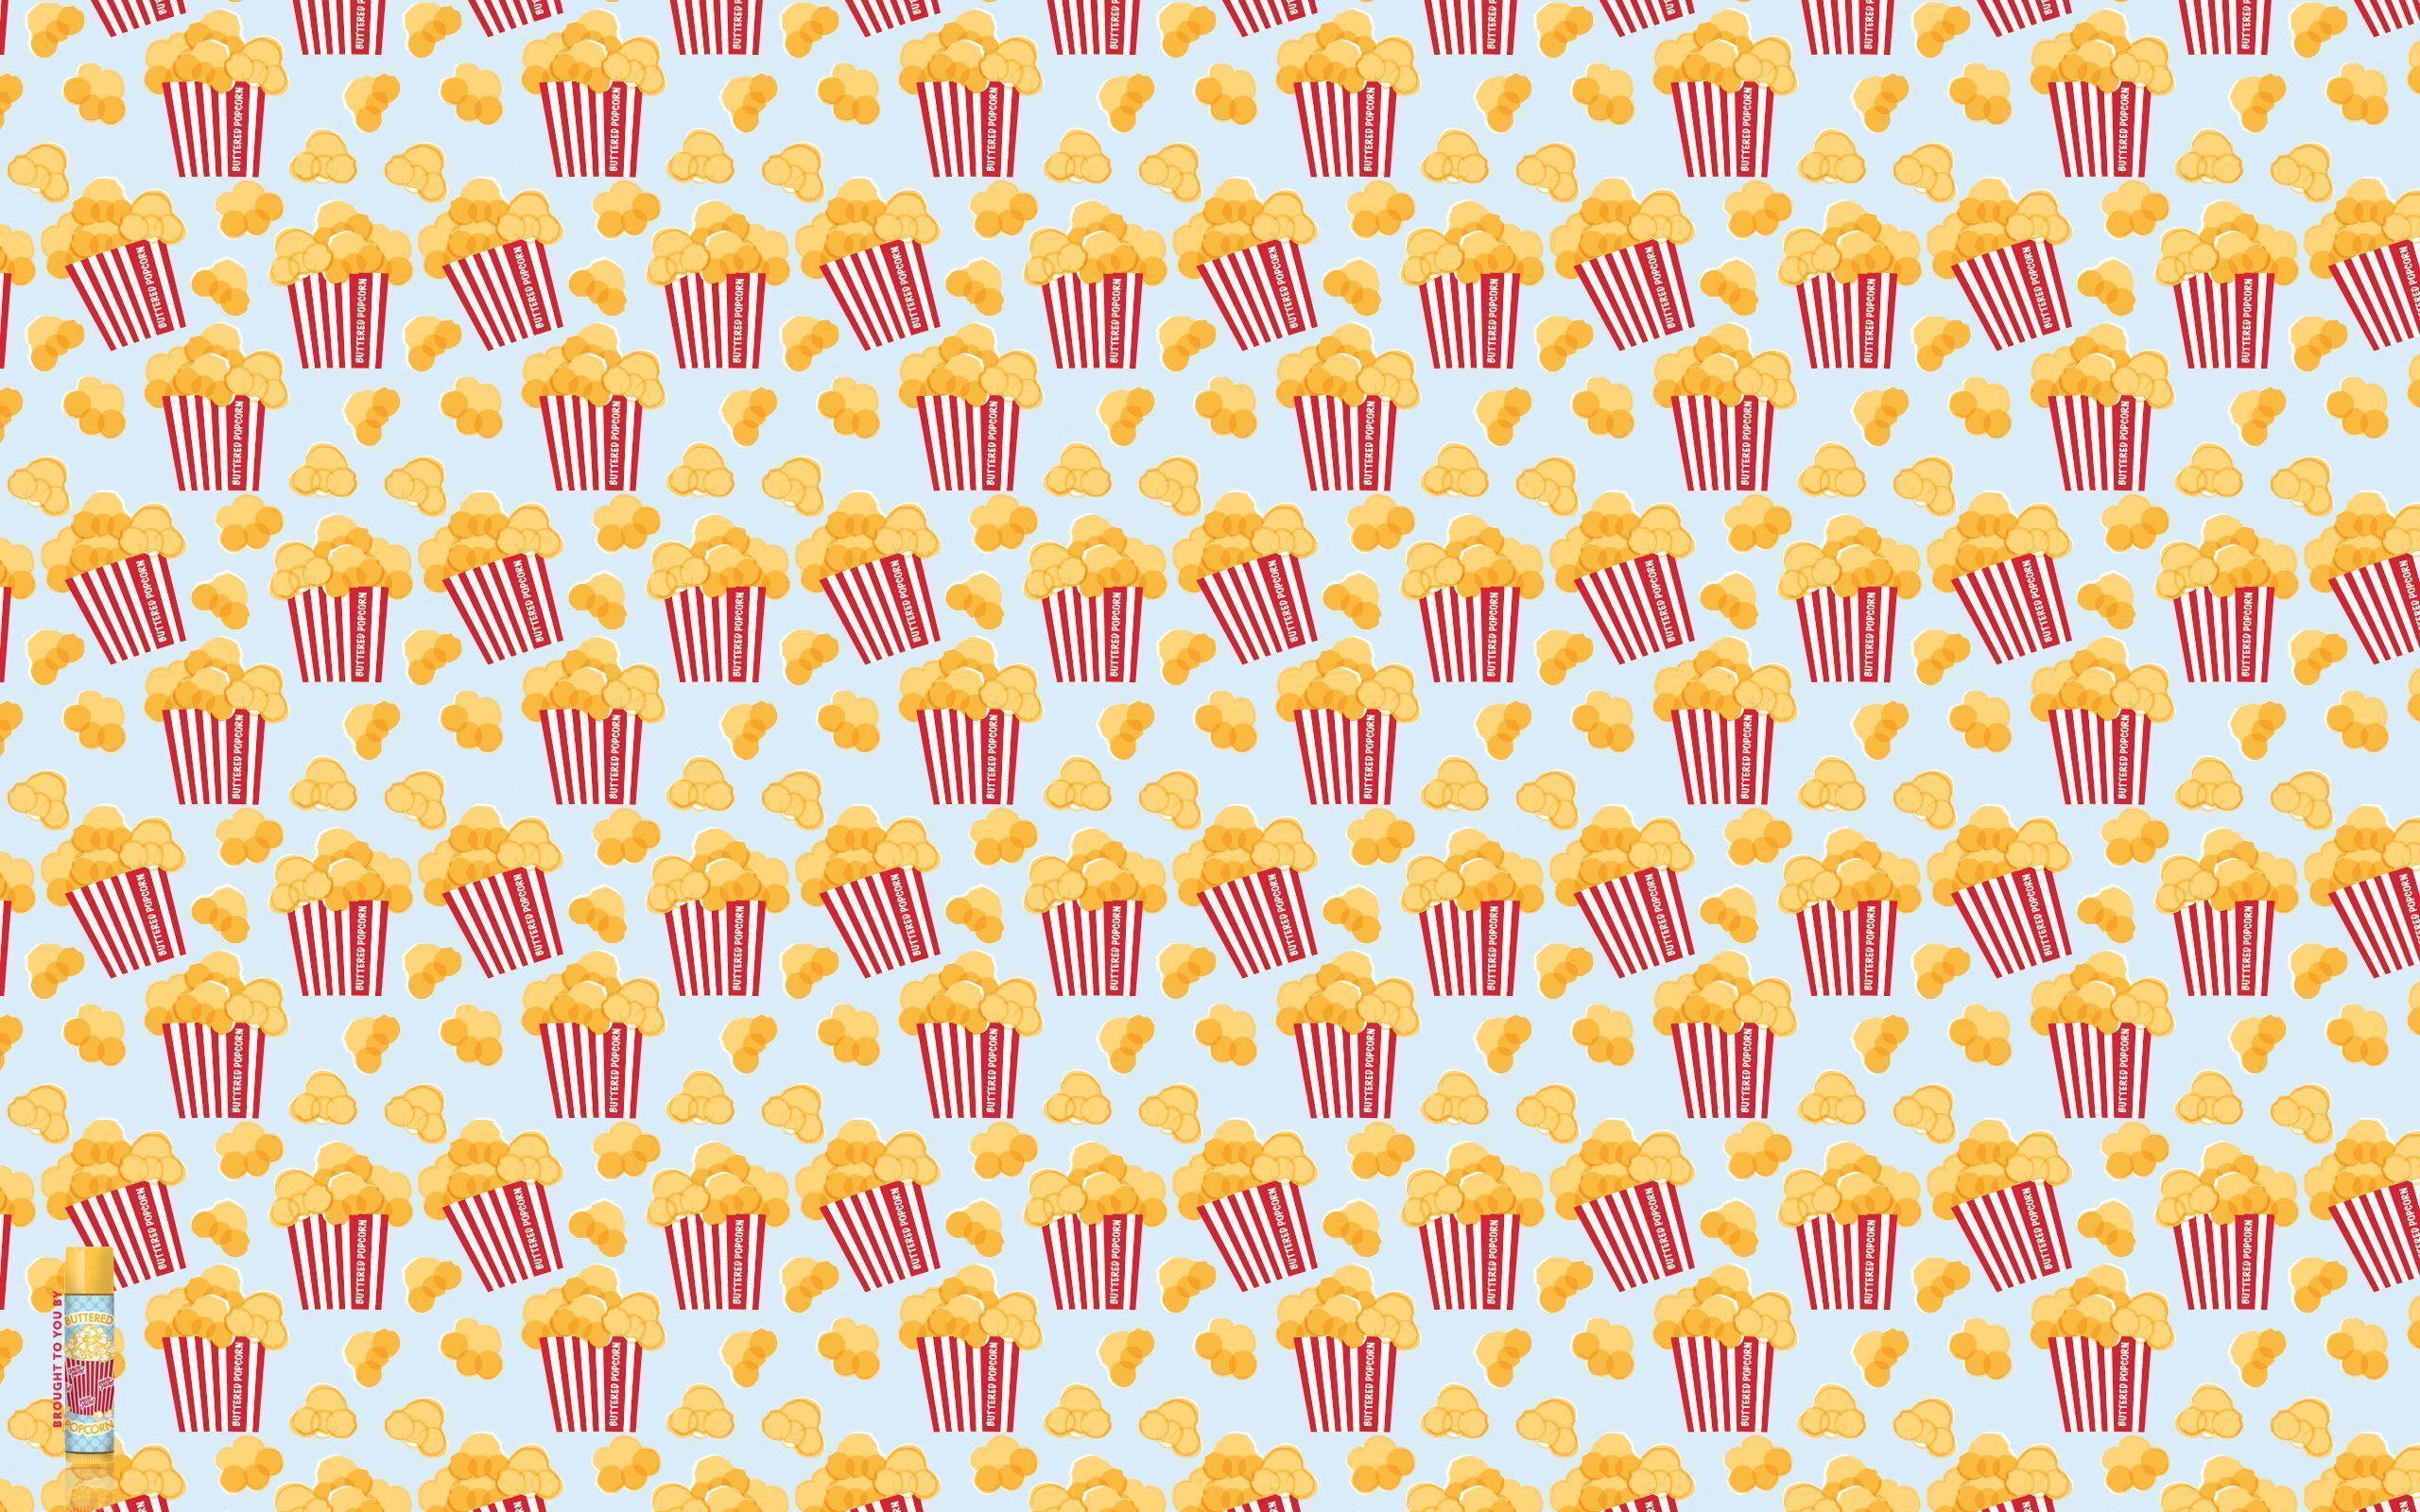 20889 Cute Popcorn Images Stock Photos  Vectors  Shutterstock